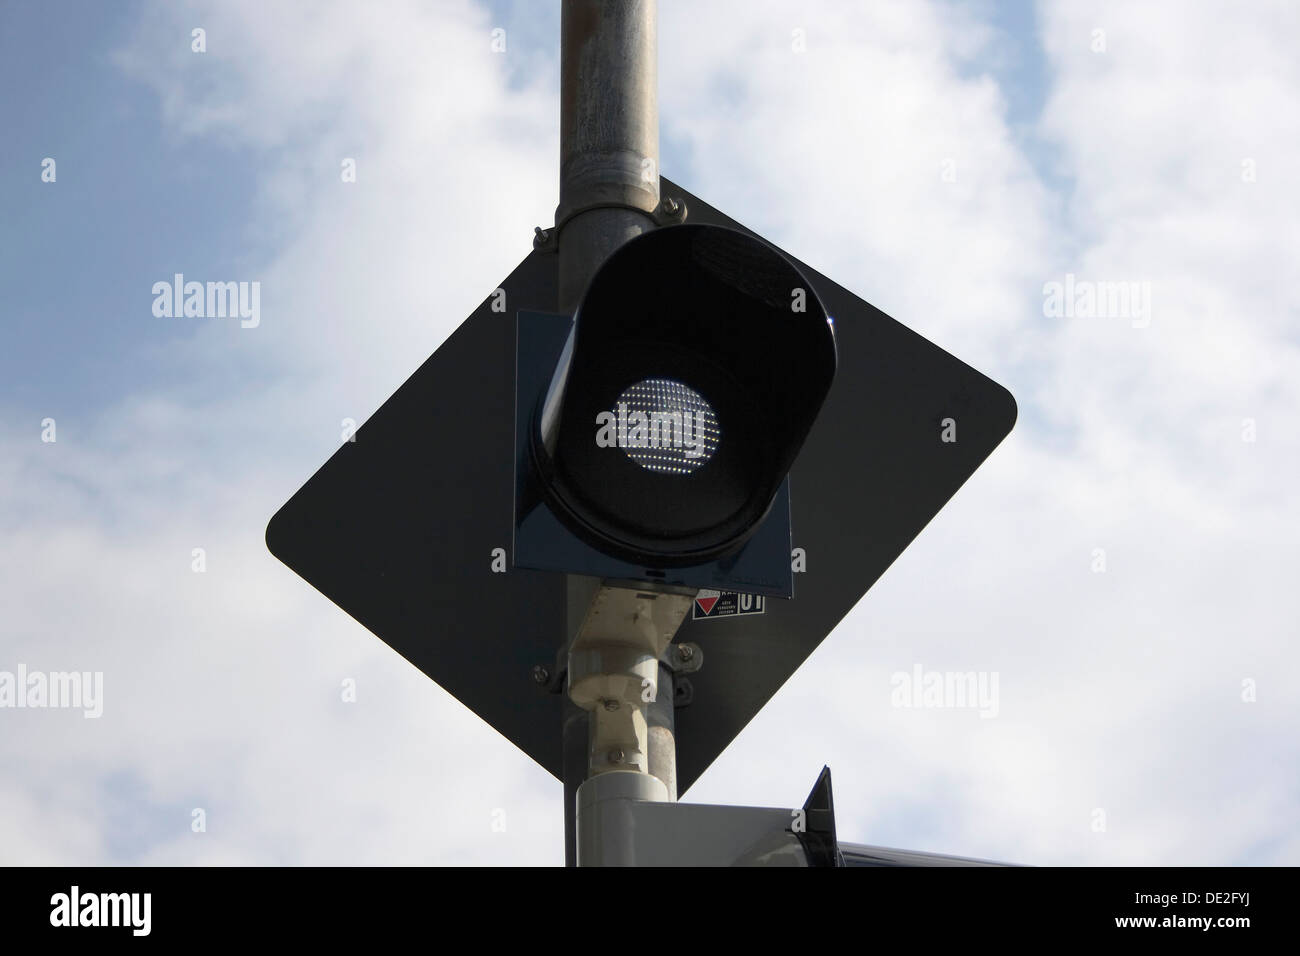 Monitoring camera for red-light violators at a traffic light Stock Photo